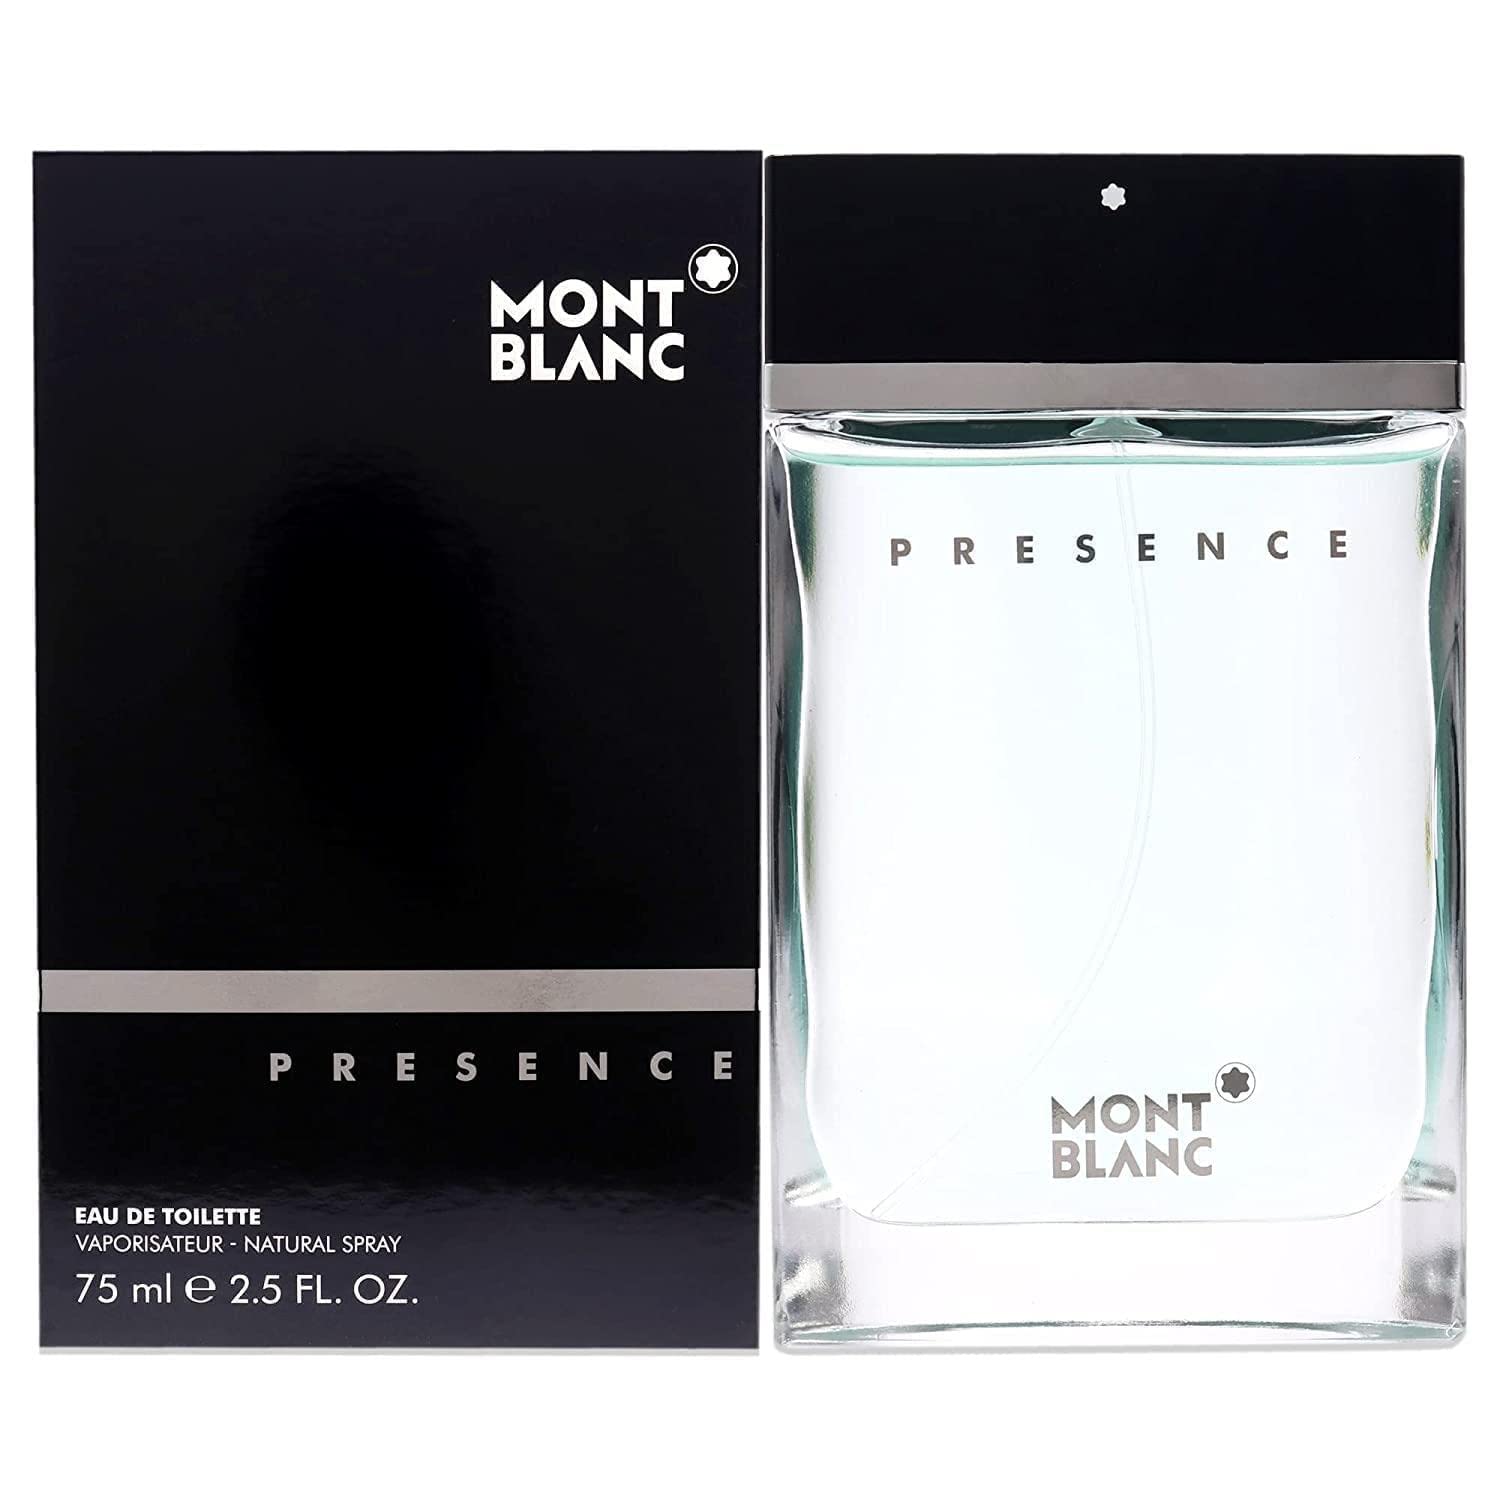 Presence by Mont Blanc 2.5 oz EDT Spray for Men